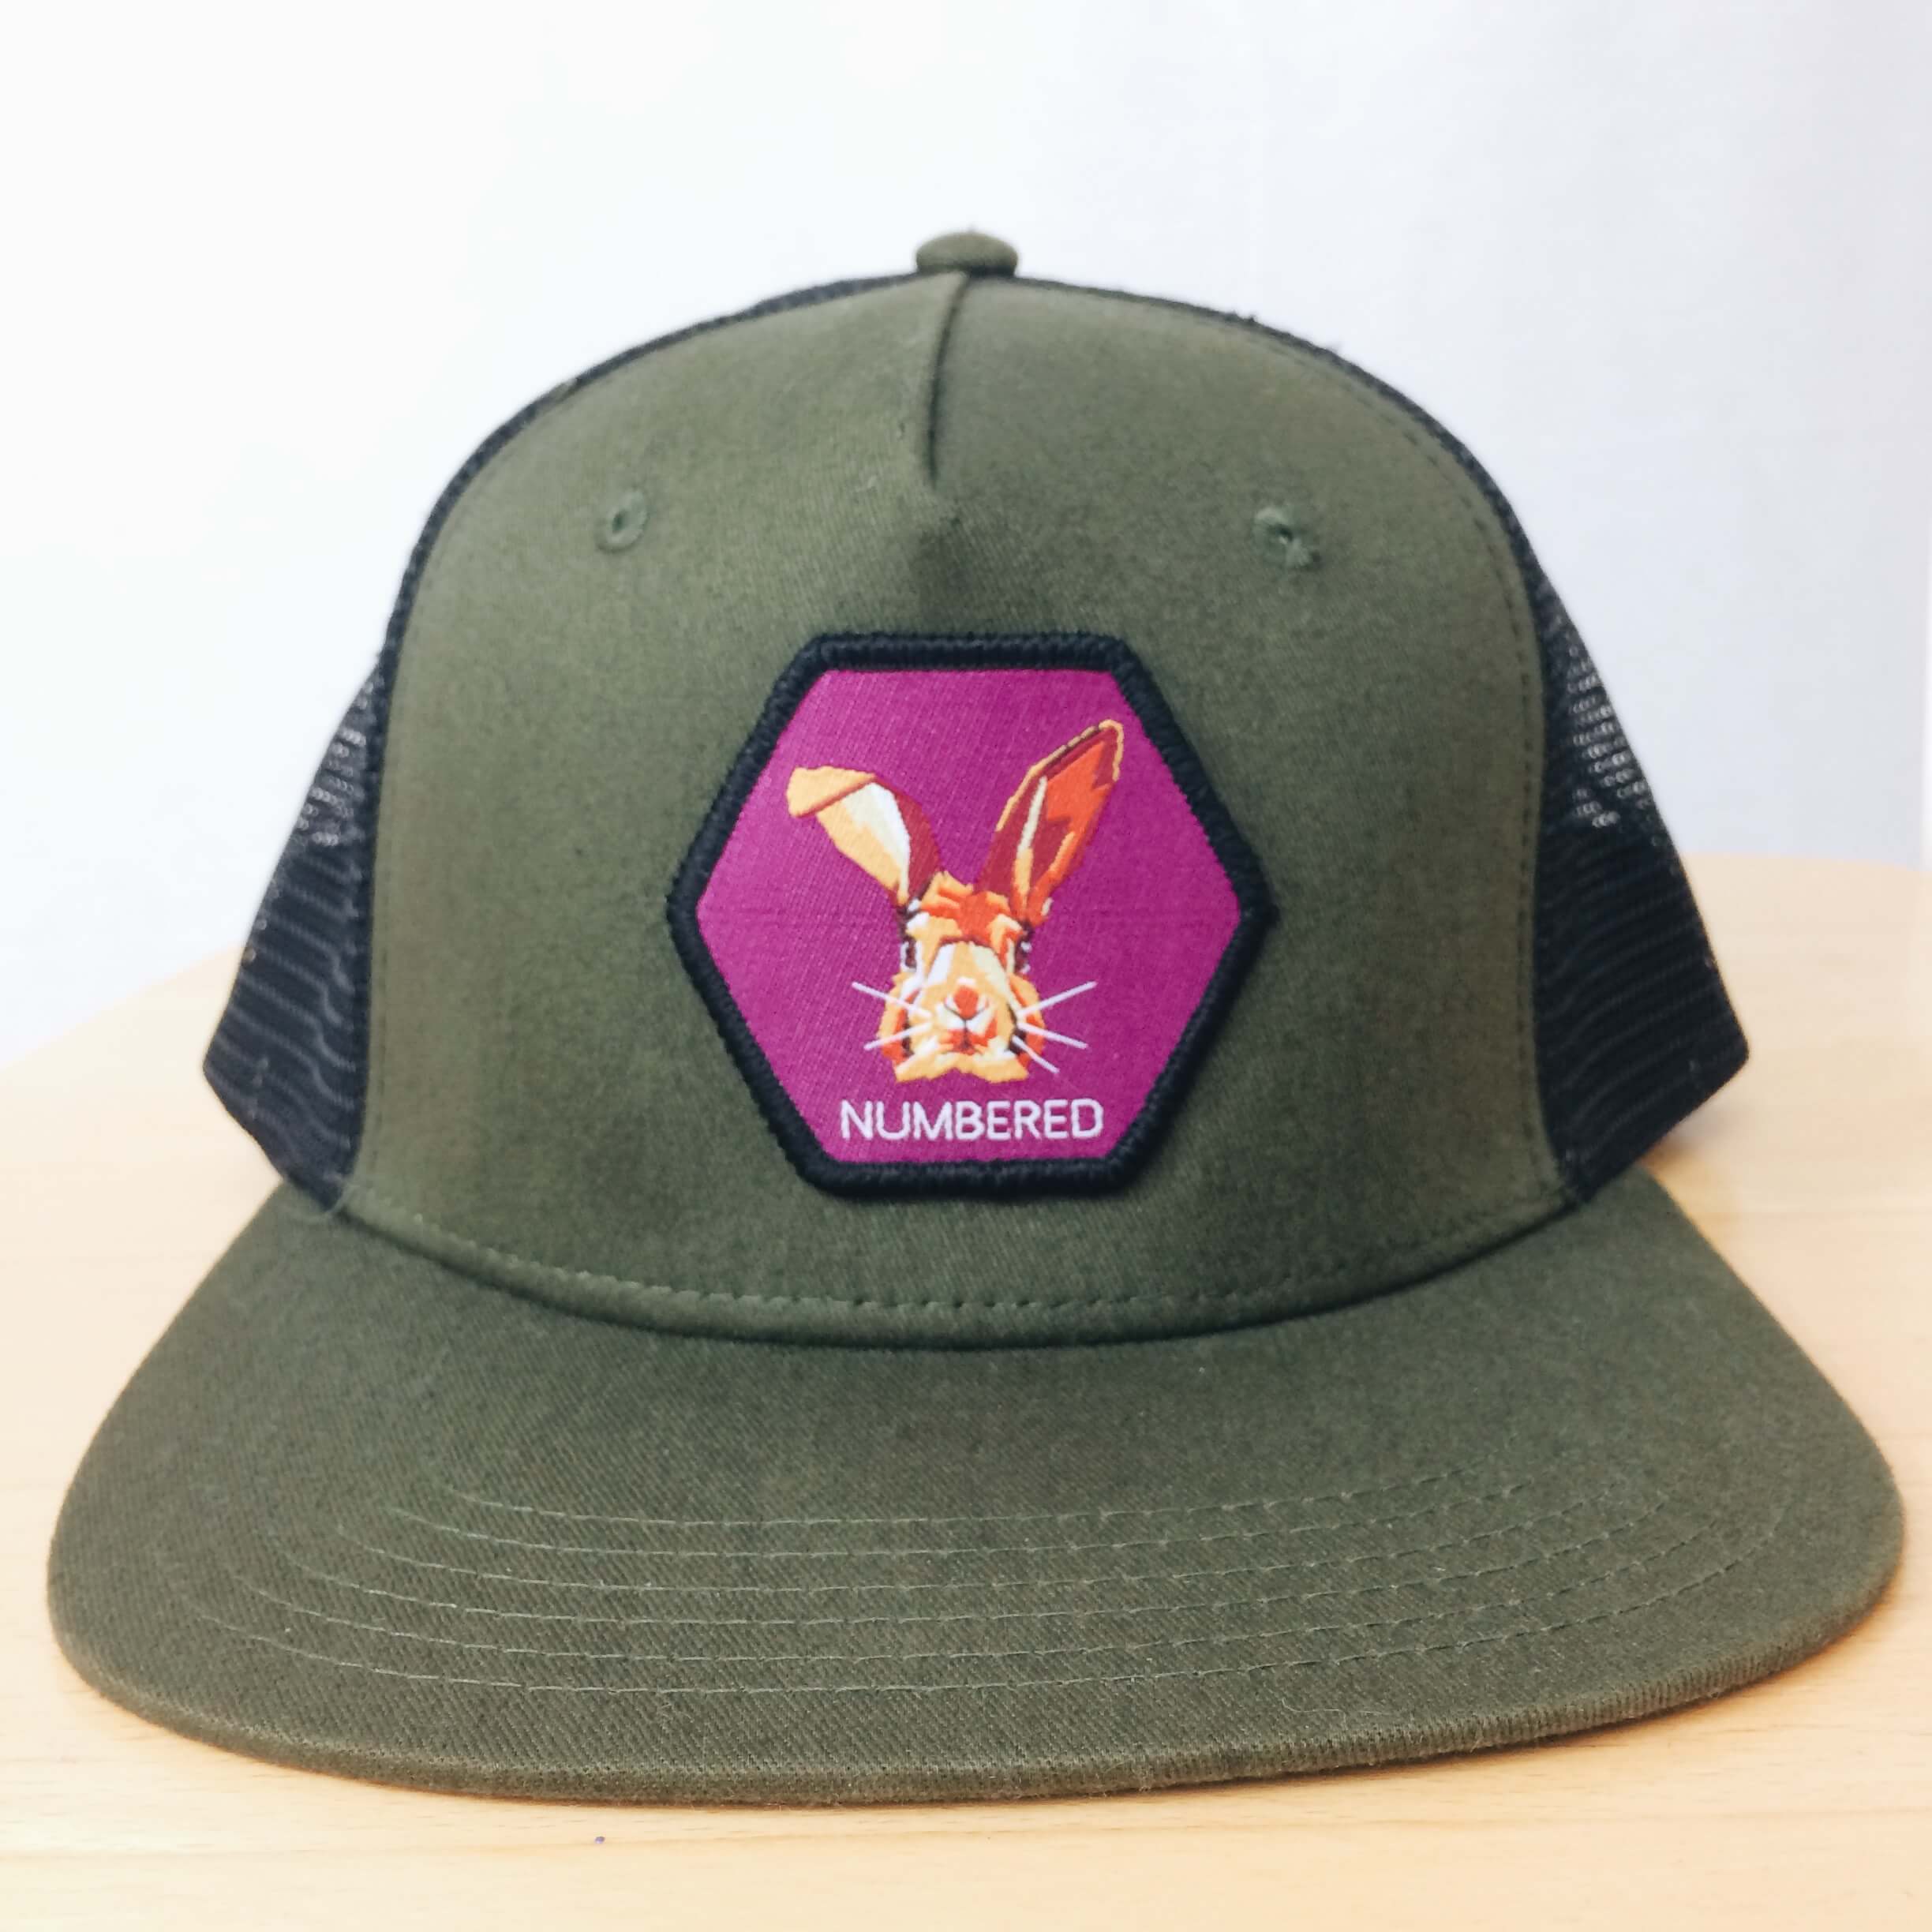 Christian olive green rabbit hare hair flat bill cap hat by DonKeySpeaksUp